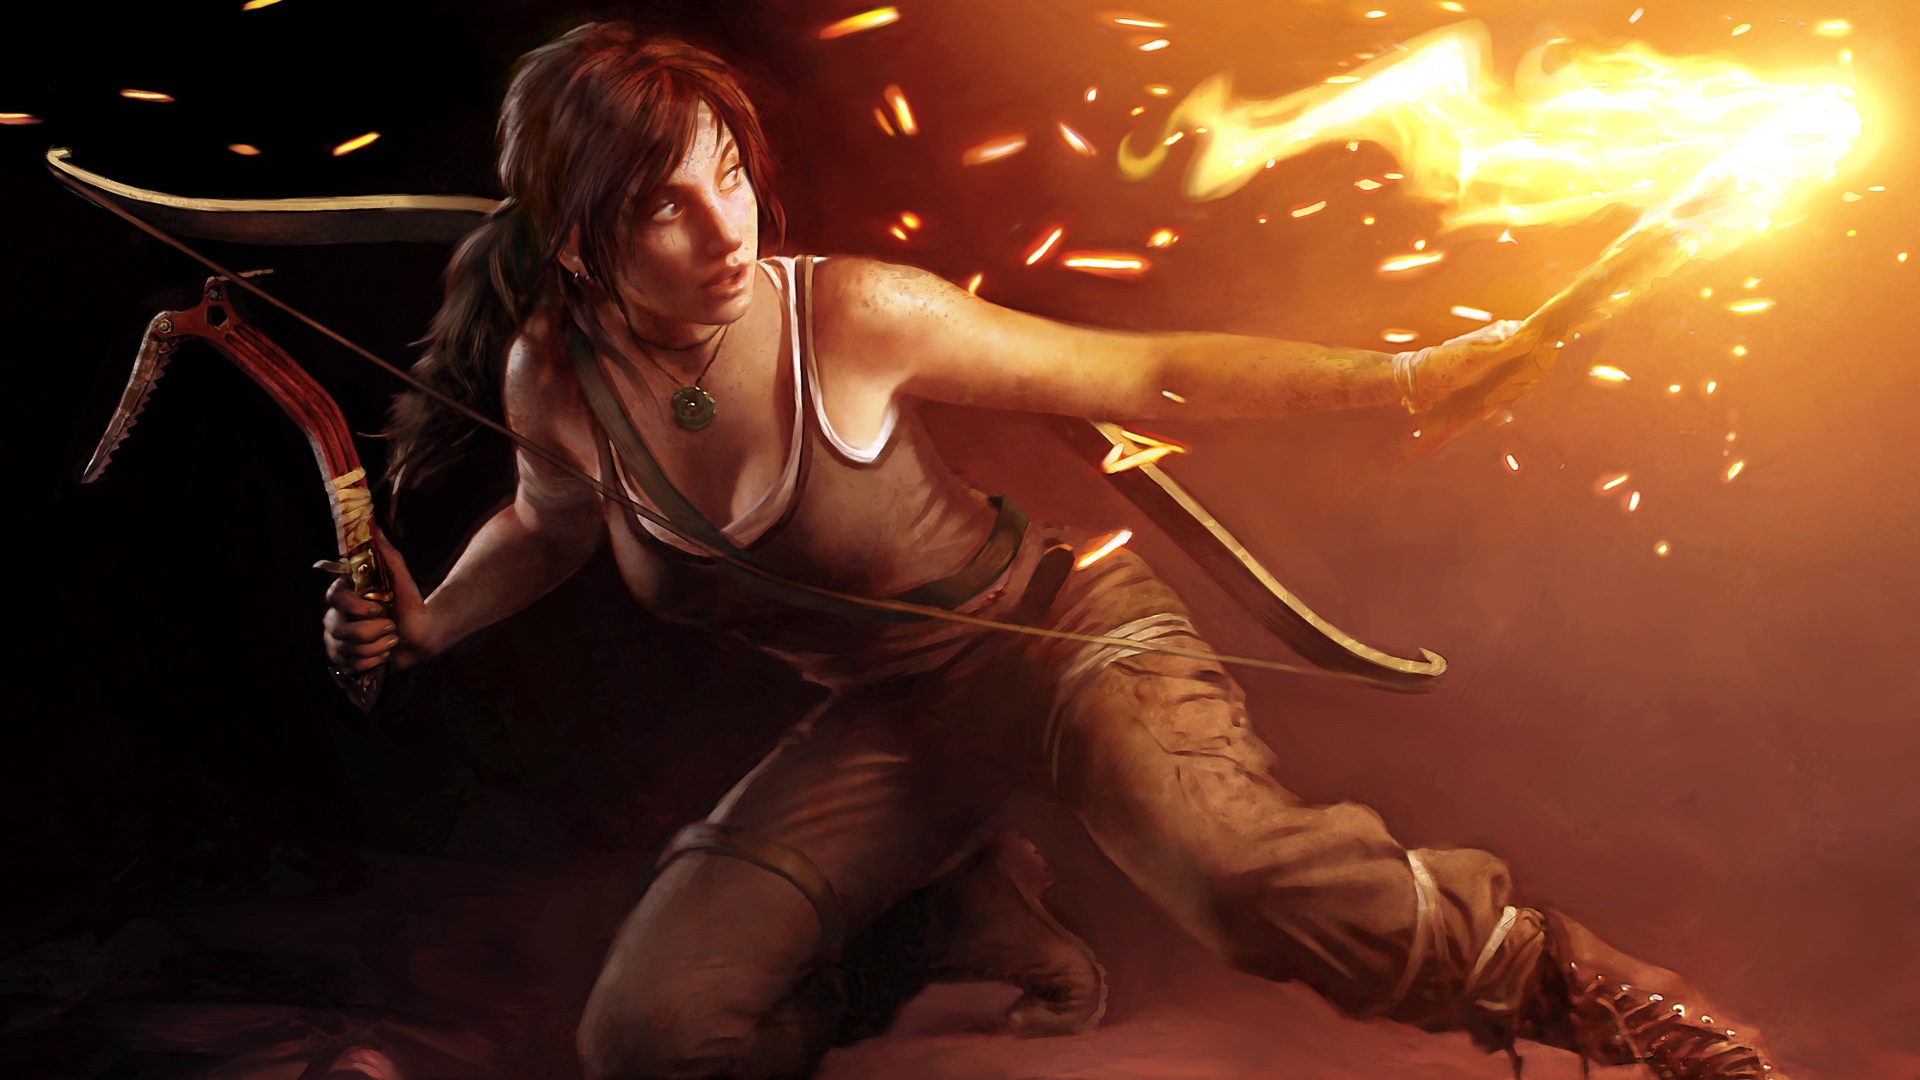 Lara Croft Tomb Raider HD Wallpaper Imagebank Biz